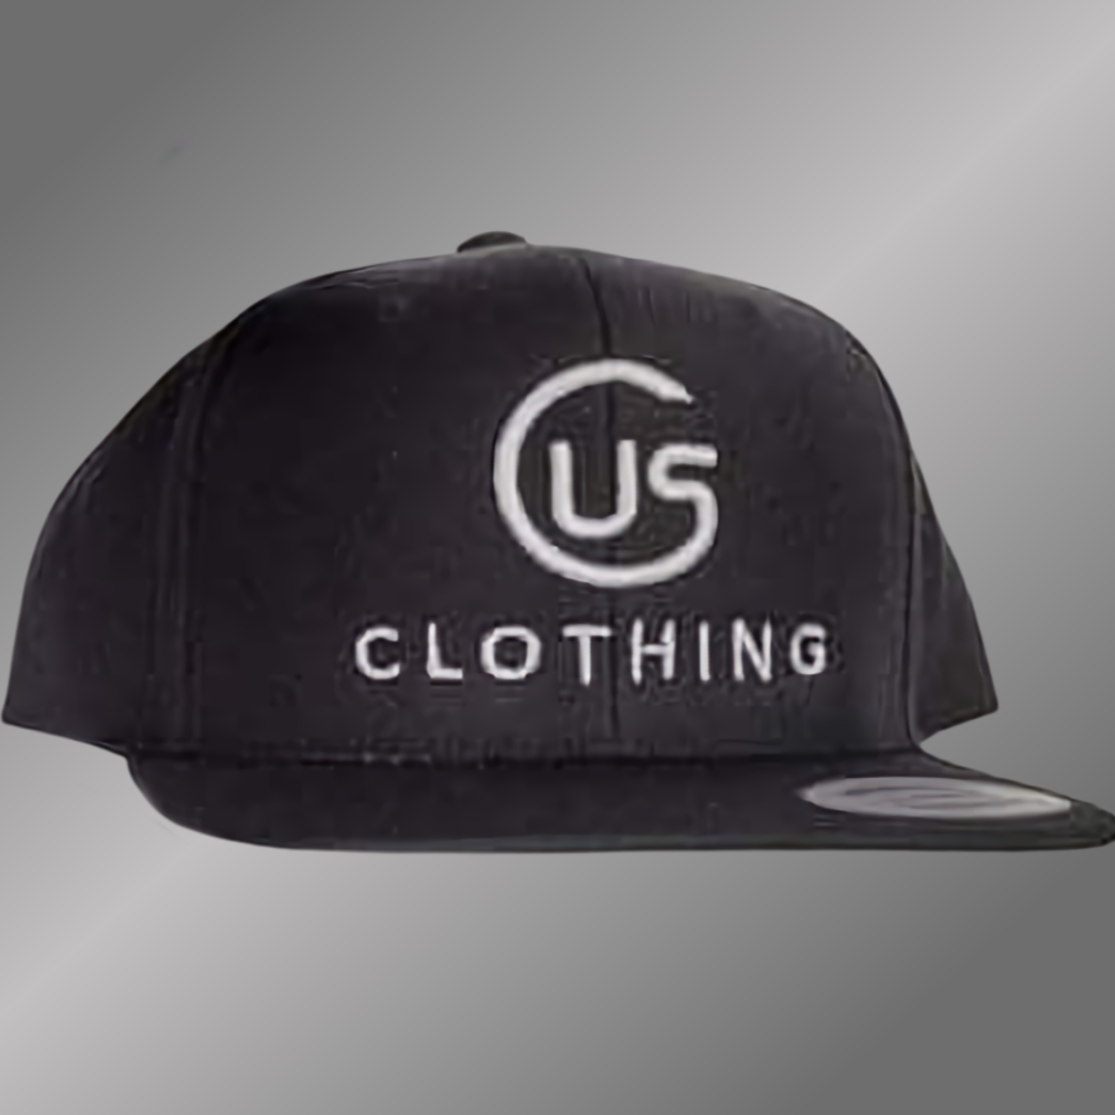 CLASSIC US CLOTHING SNAPBACK HAT